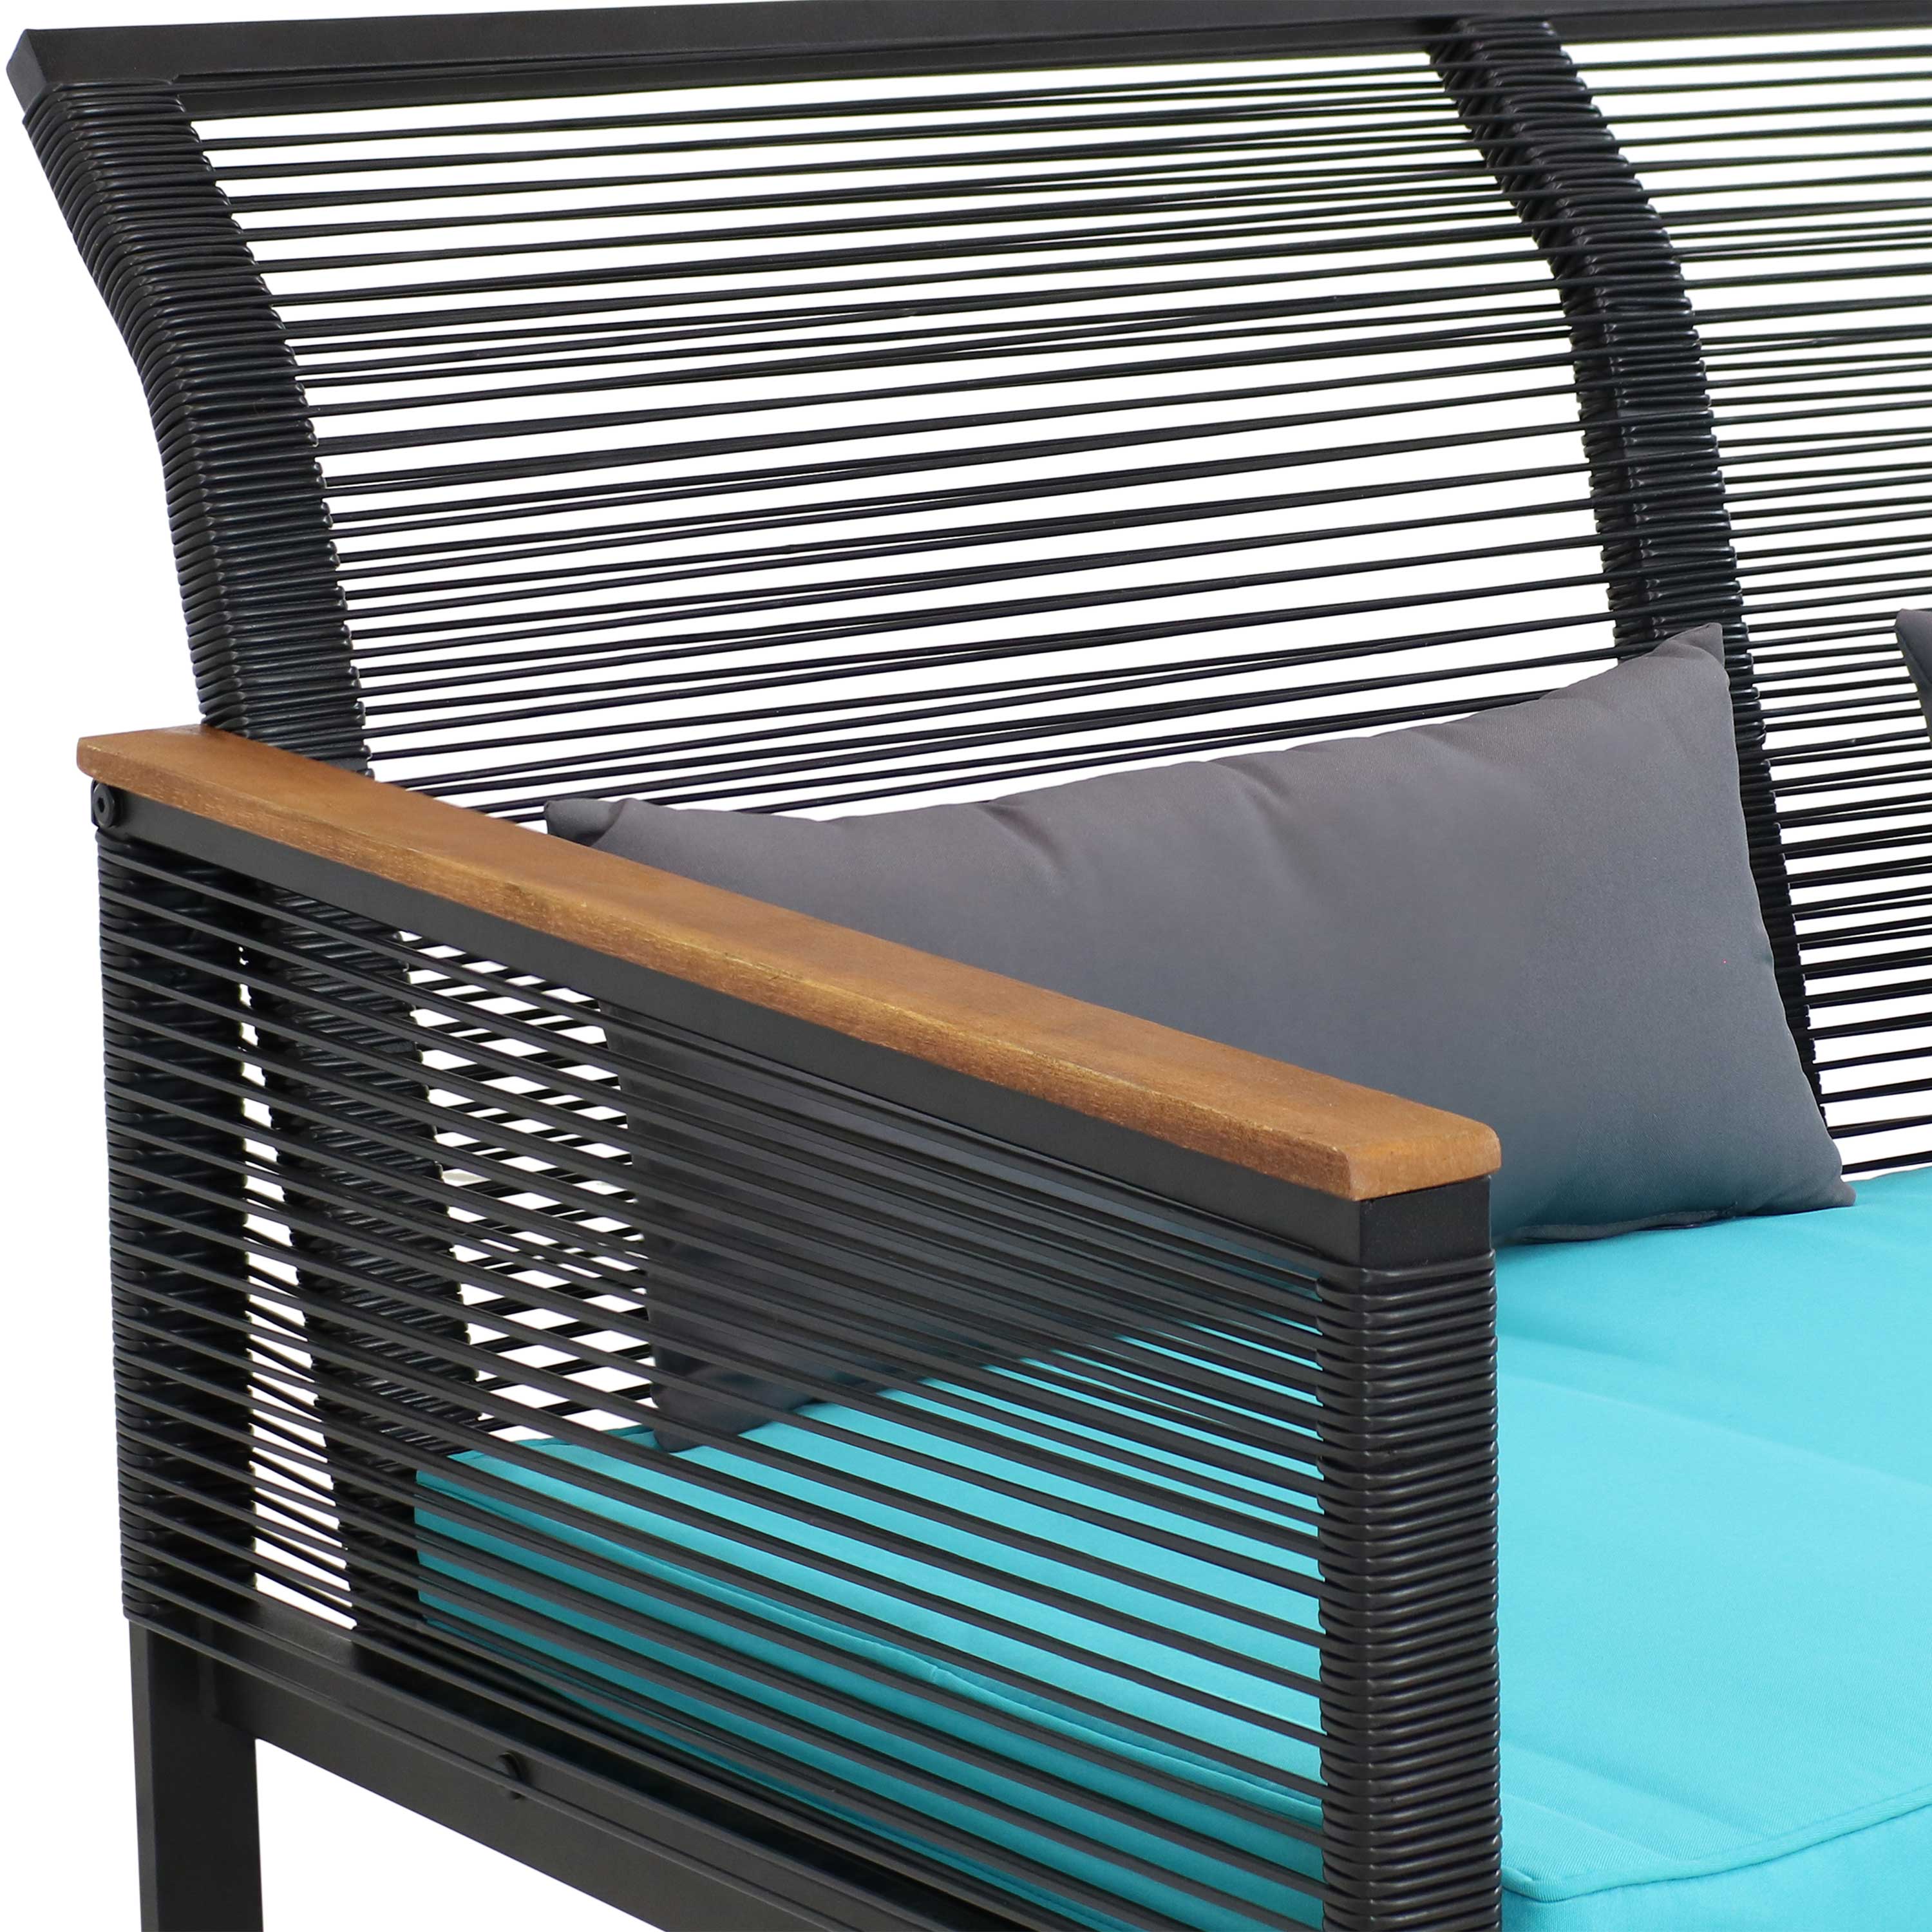 Sunnydaze Coachford 4-Piece Black Resin Rattan Outdoor Patio Furniture Set - Blue Cushions - image 5 of 10